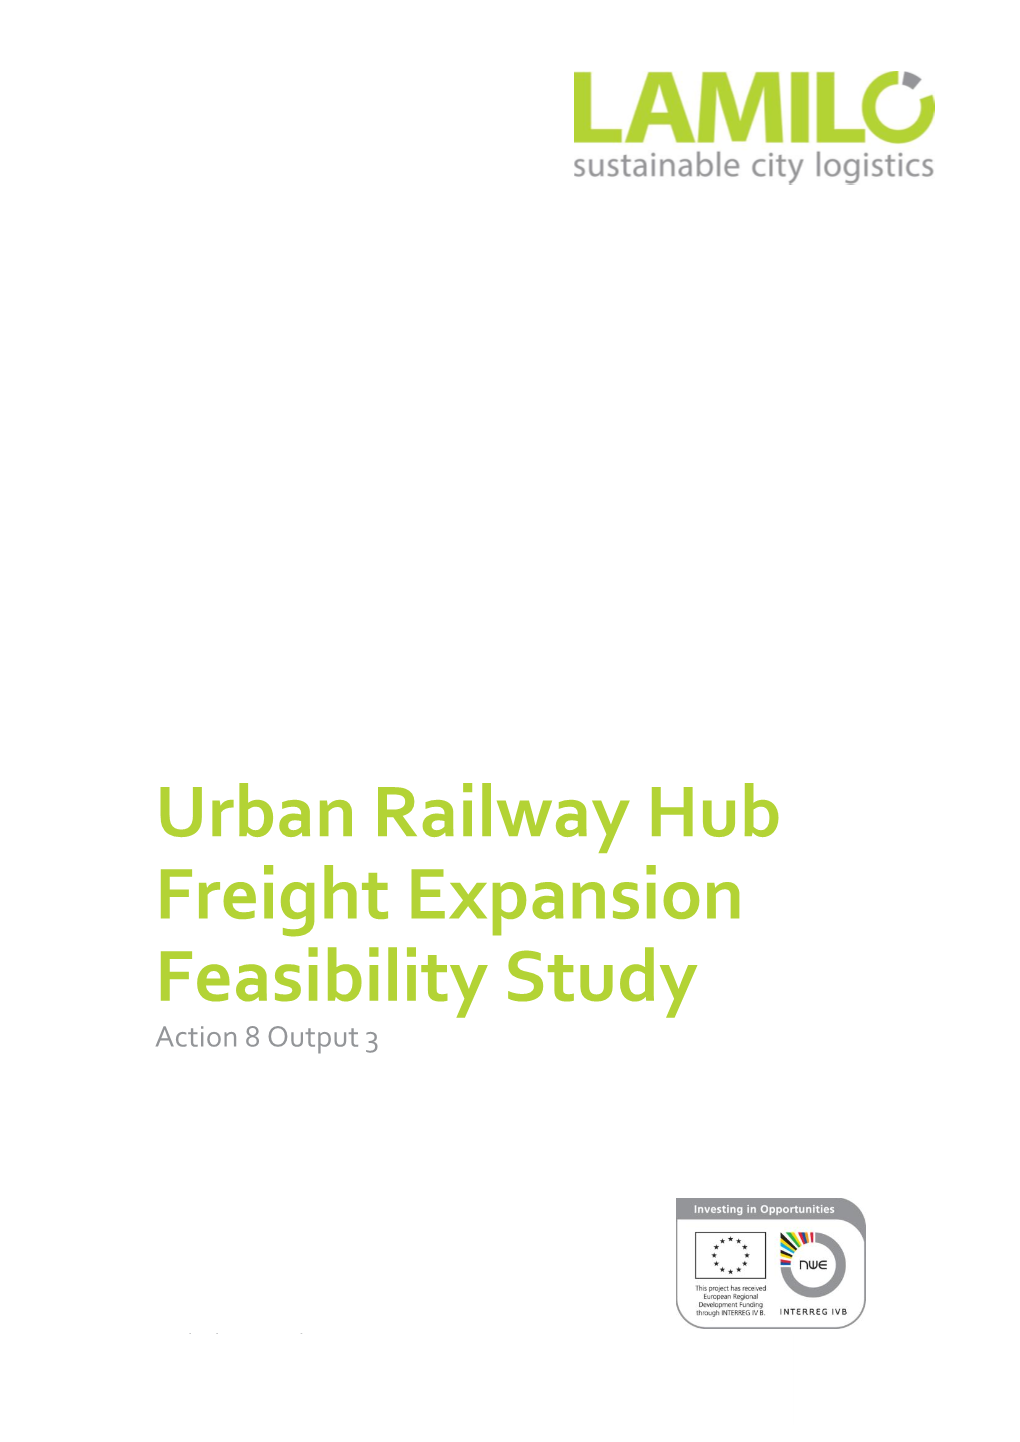 Urban Railway Hub Freight Expansion Feasibility Study Action 8 Output 3